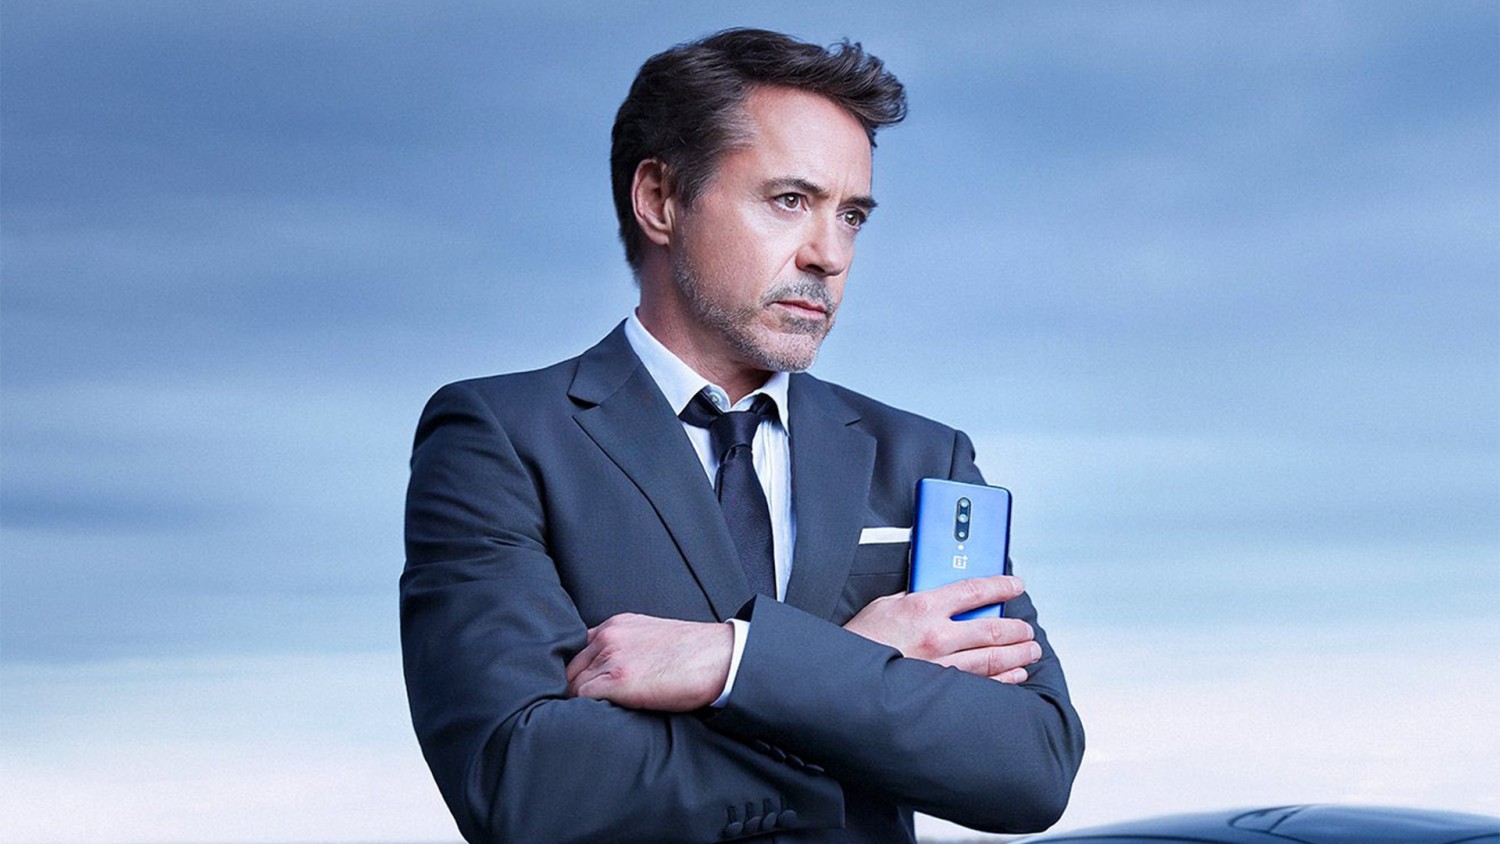 Амбассадор OnePlus Роберт Дауни младший прорекламировал бренд, используя смартфон Huawei